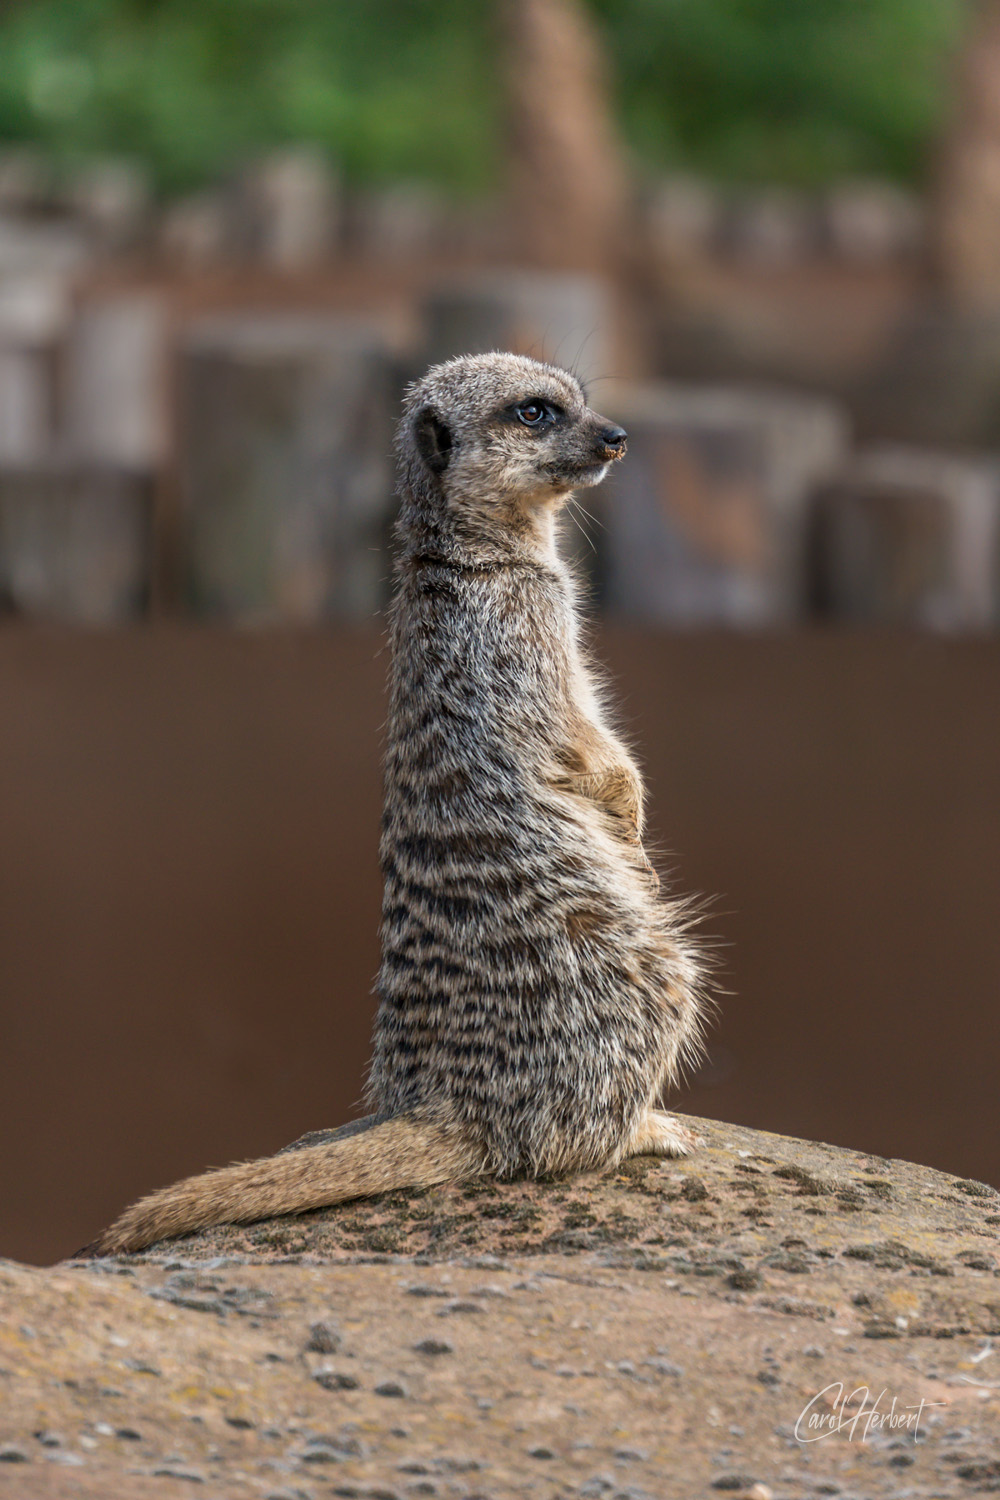 Photograph of a Meerkat